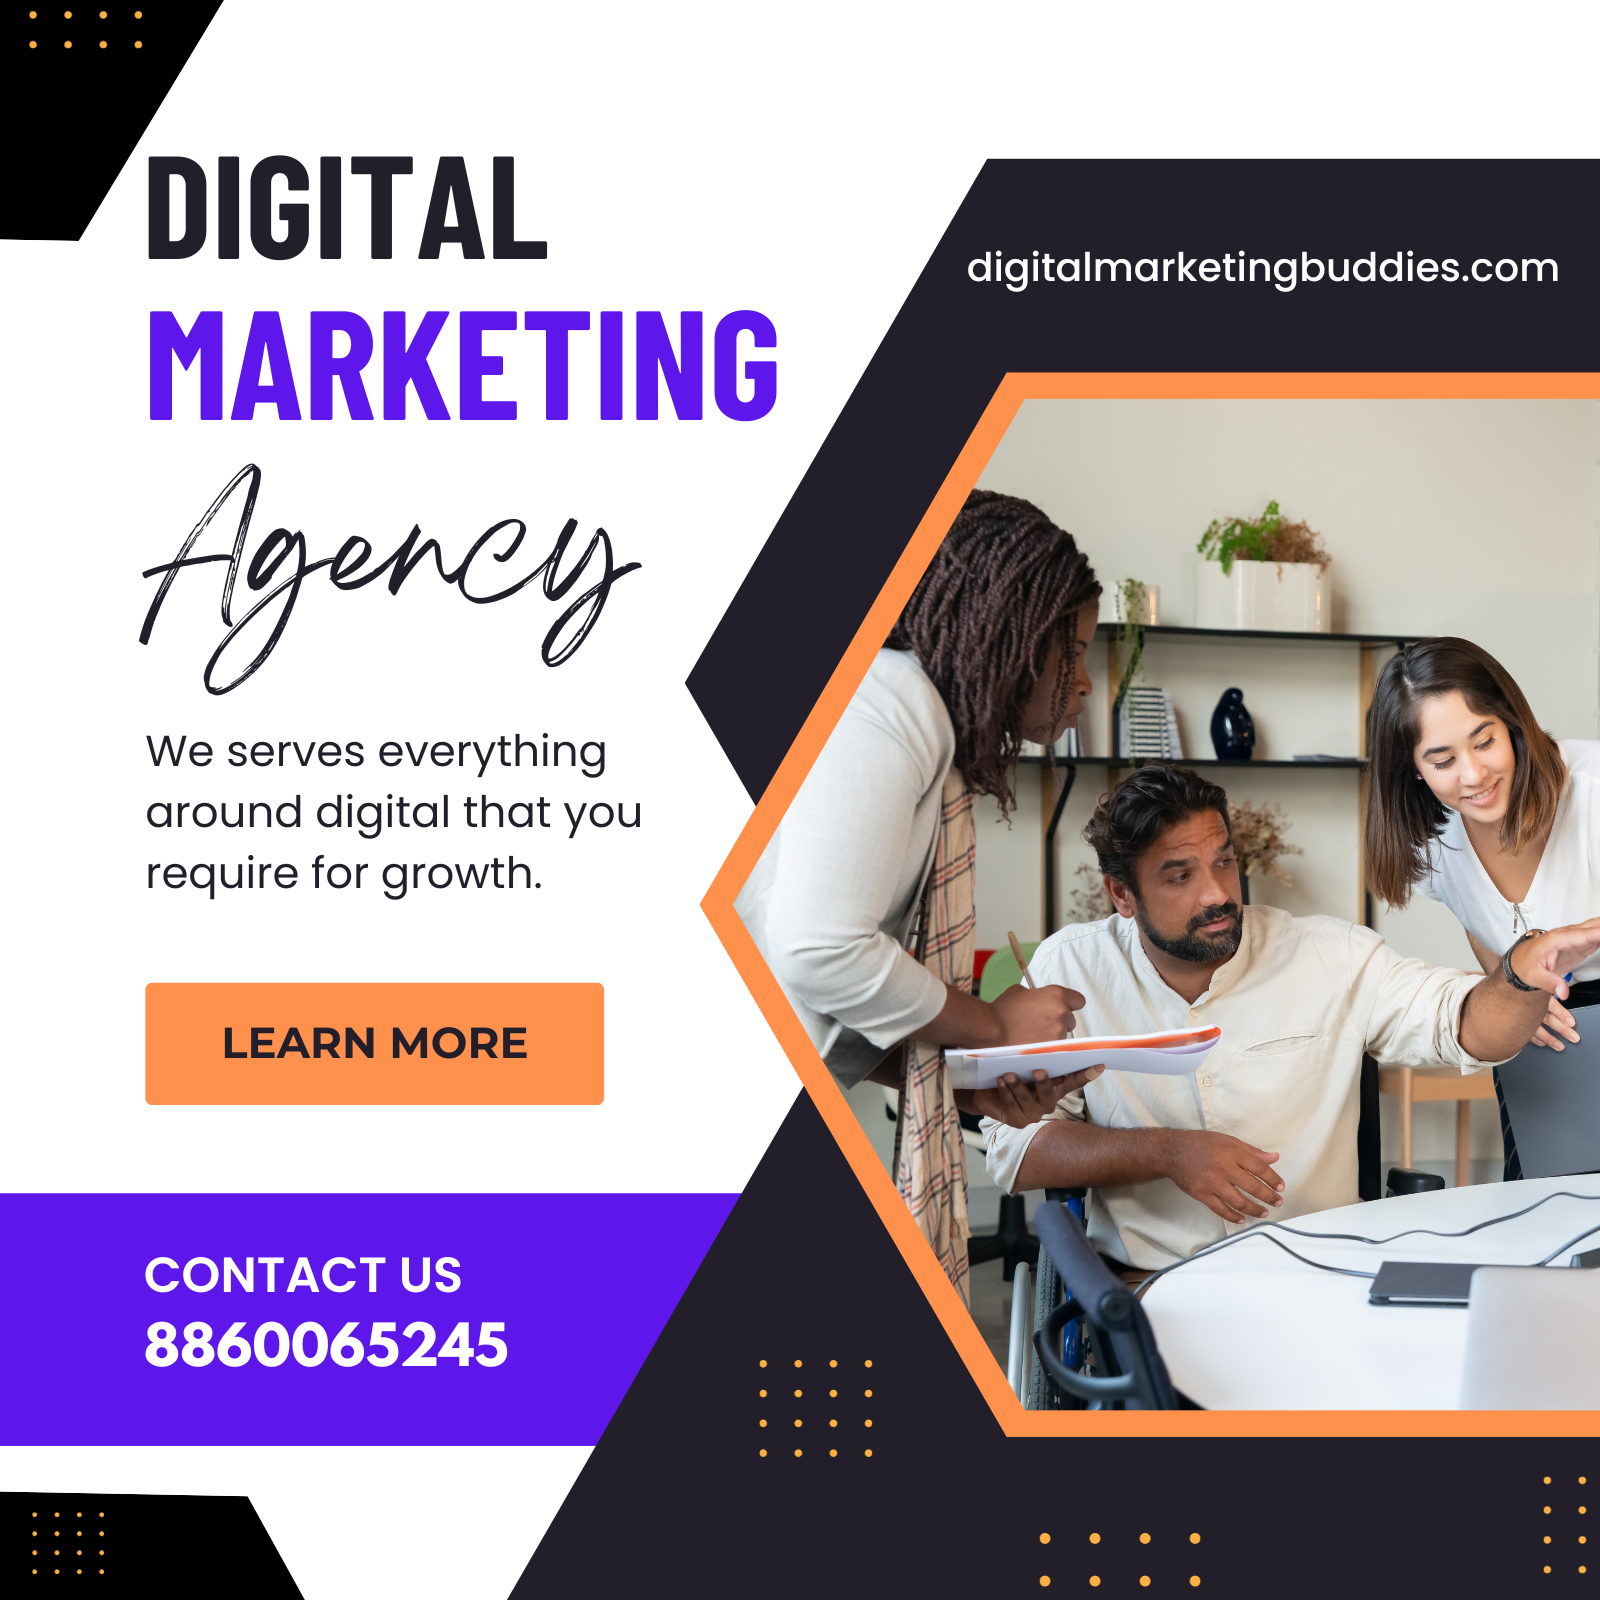 digitalmarketingbuddies ads